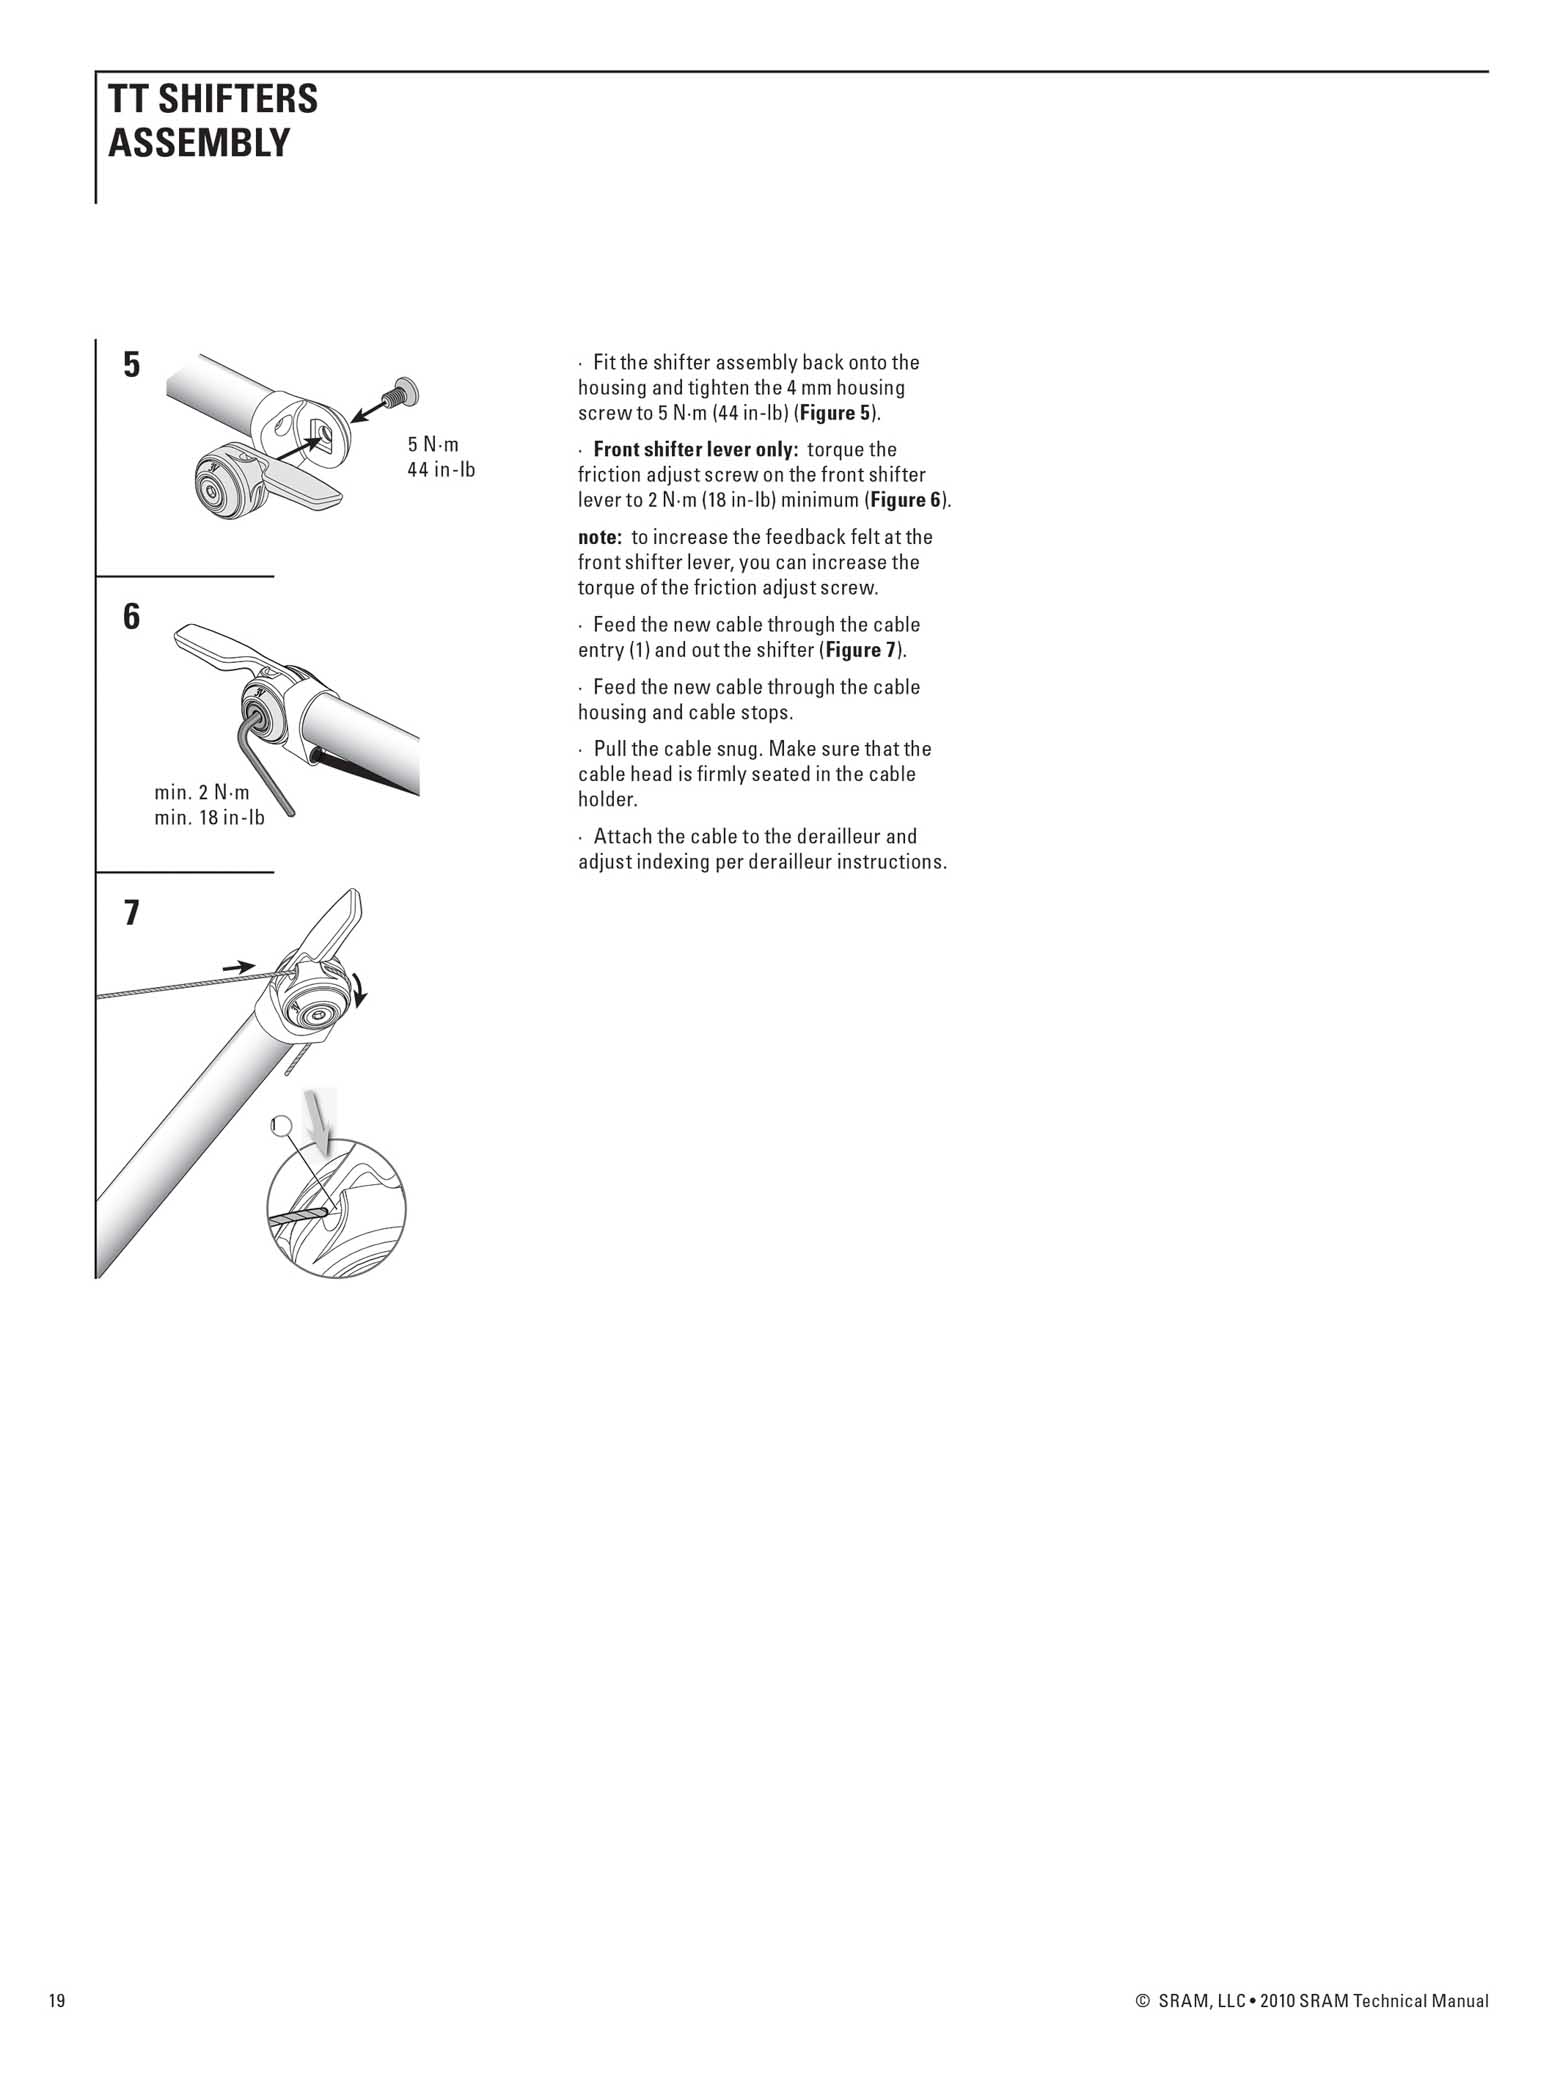 SRAM Technical Manual 2010 page 019 main image